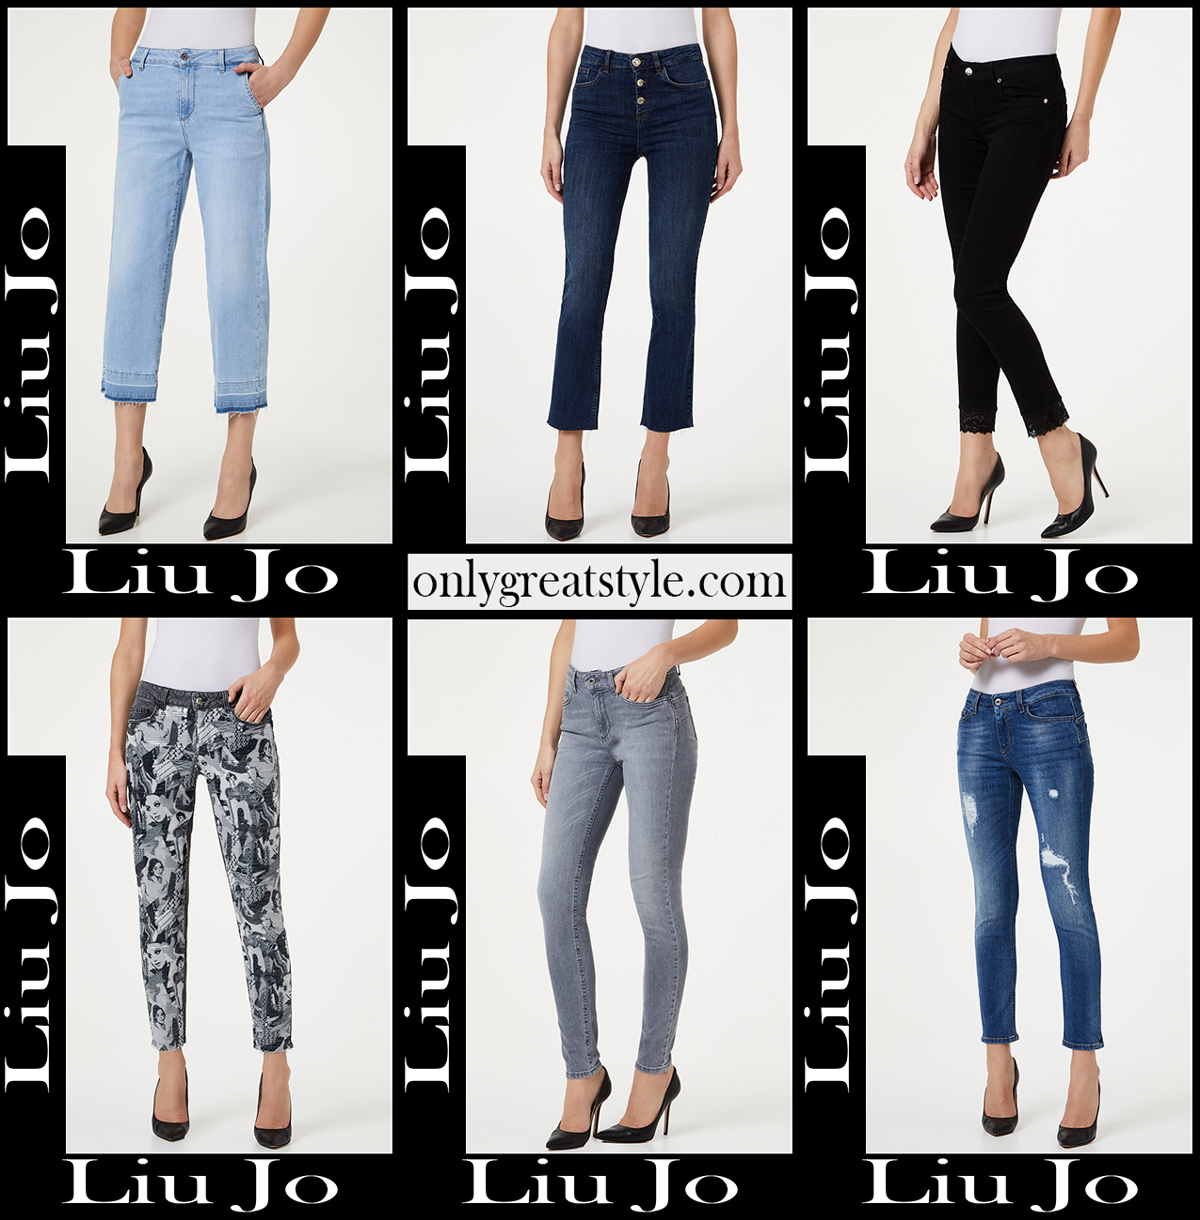 Liu Jo denim 2020 jeans womens clothing